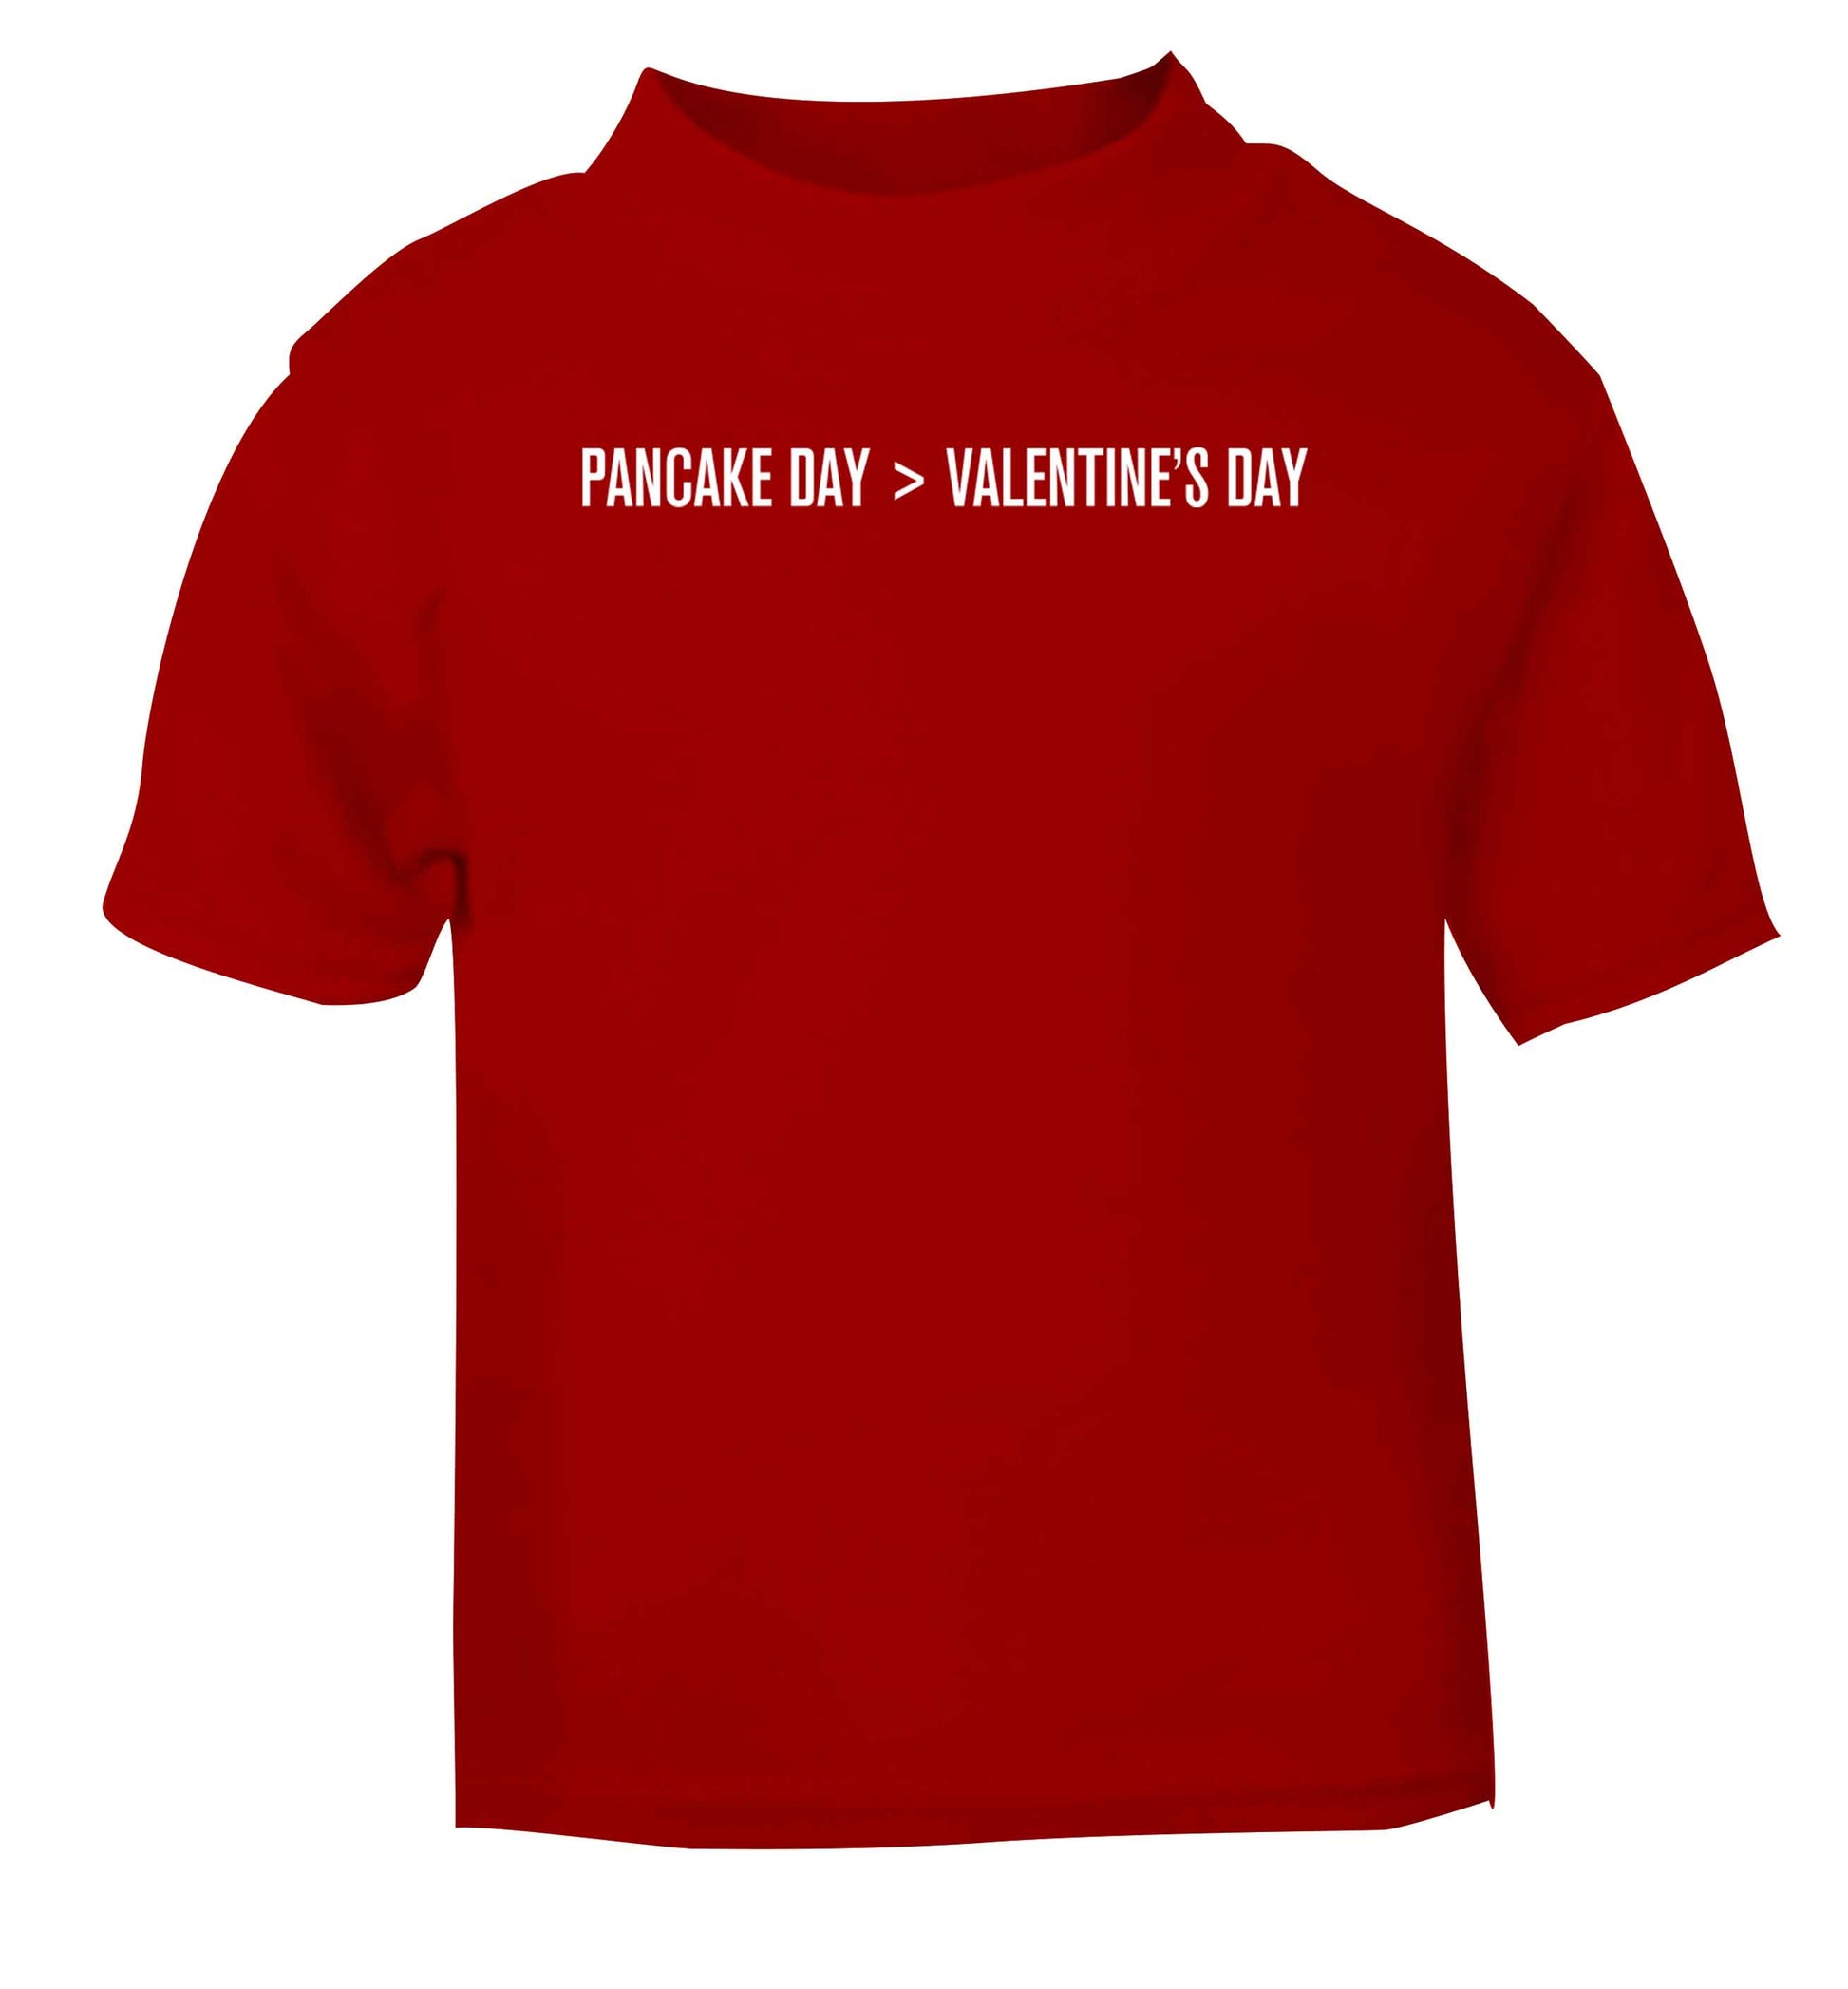 Pancake day > valentines day red baby toddler Tshirt 2 Years